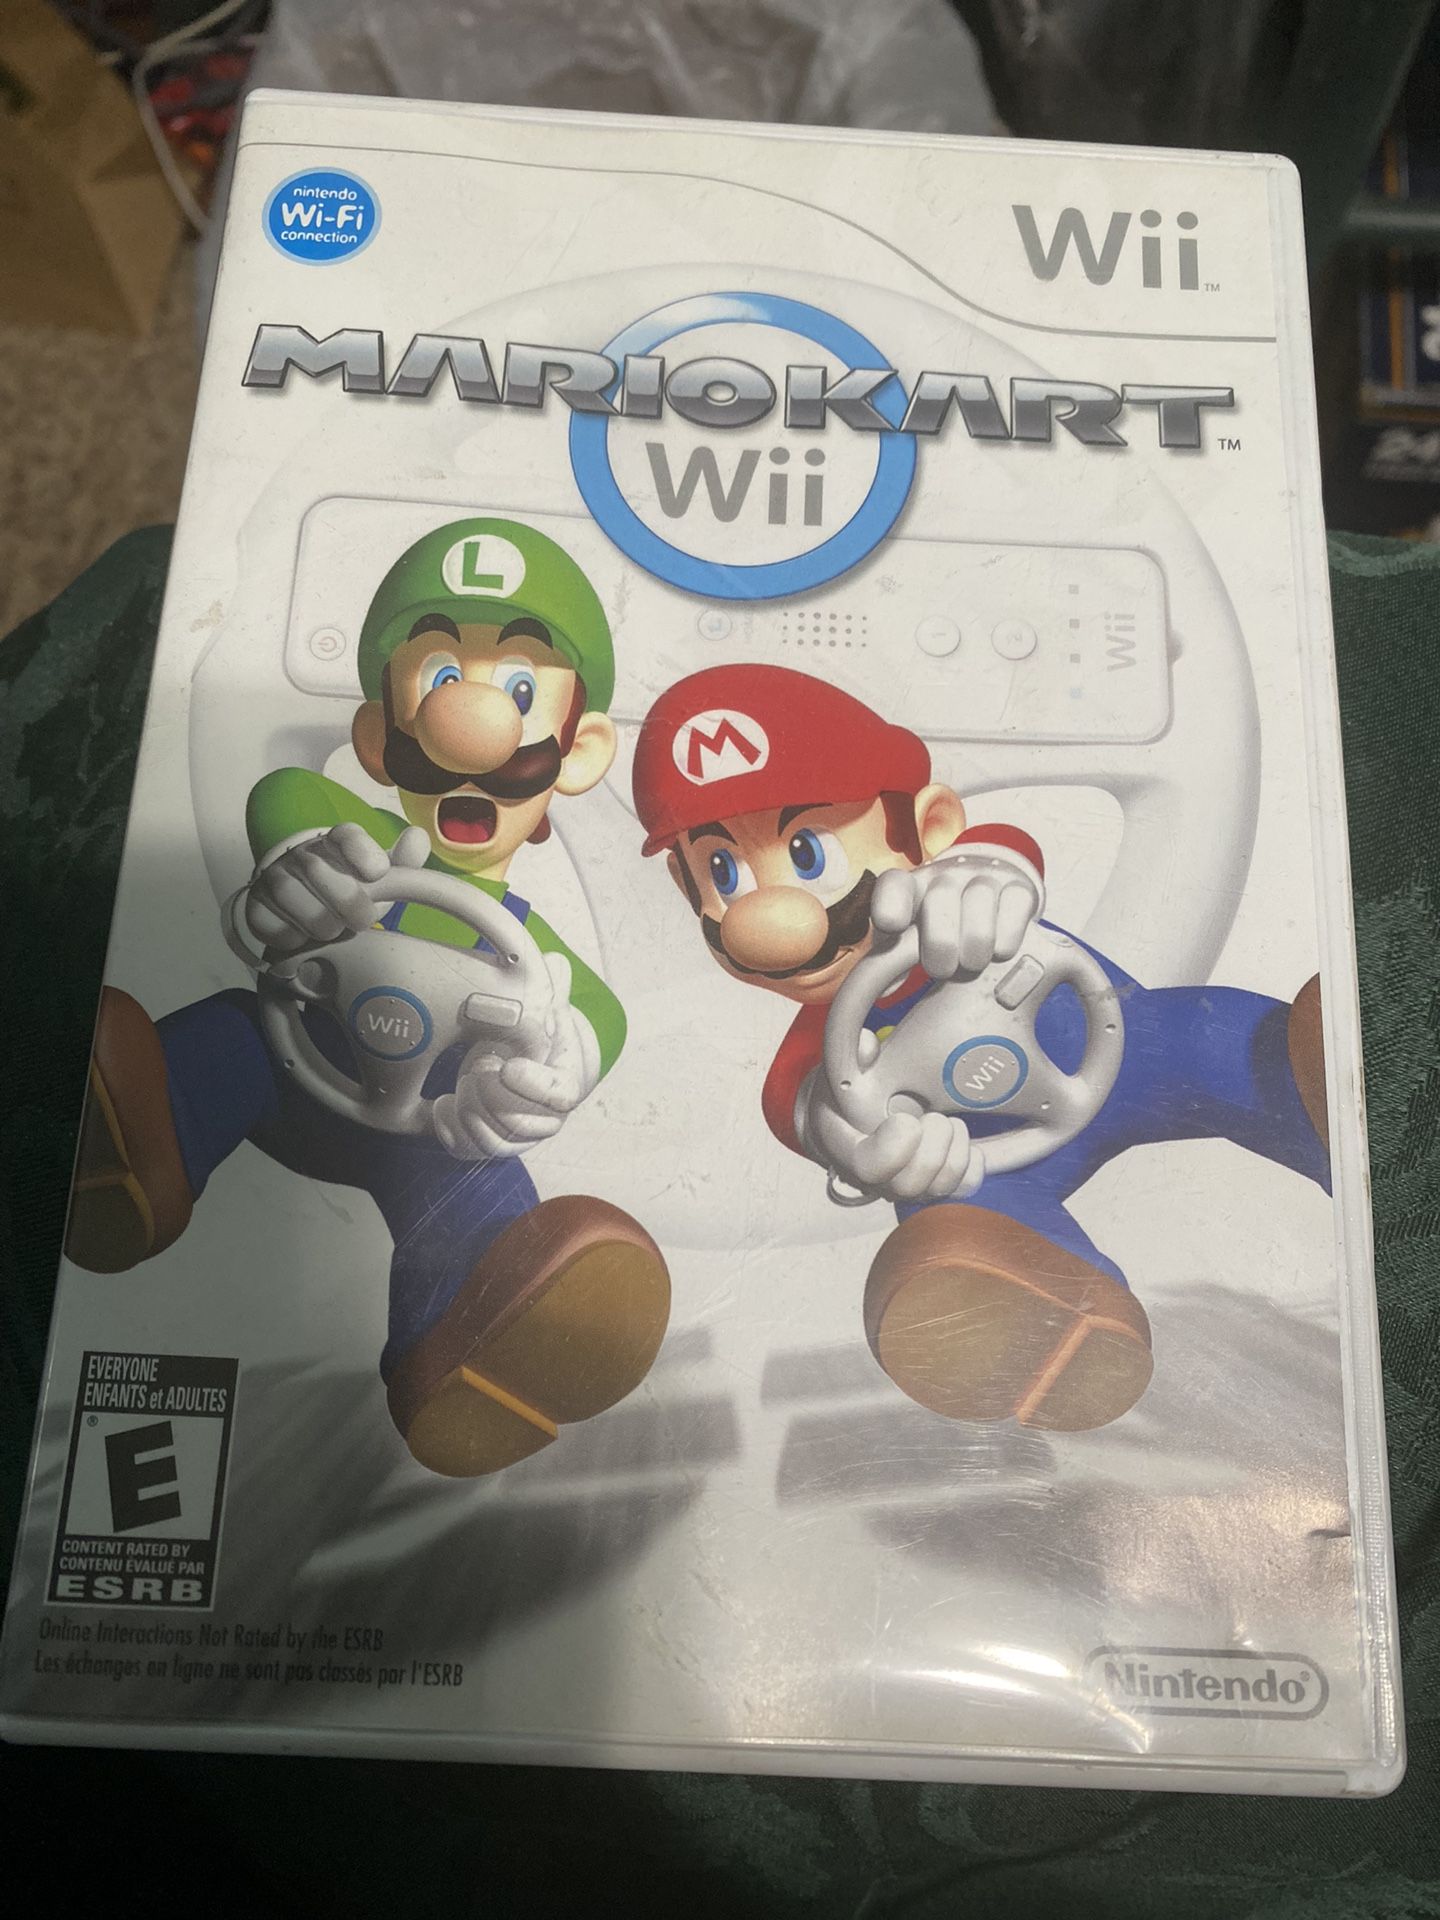 Selling Copy Of Mario Kart Wii